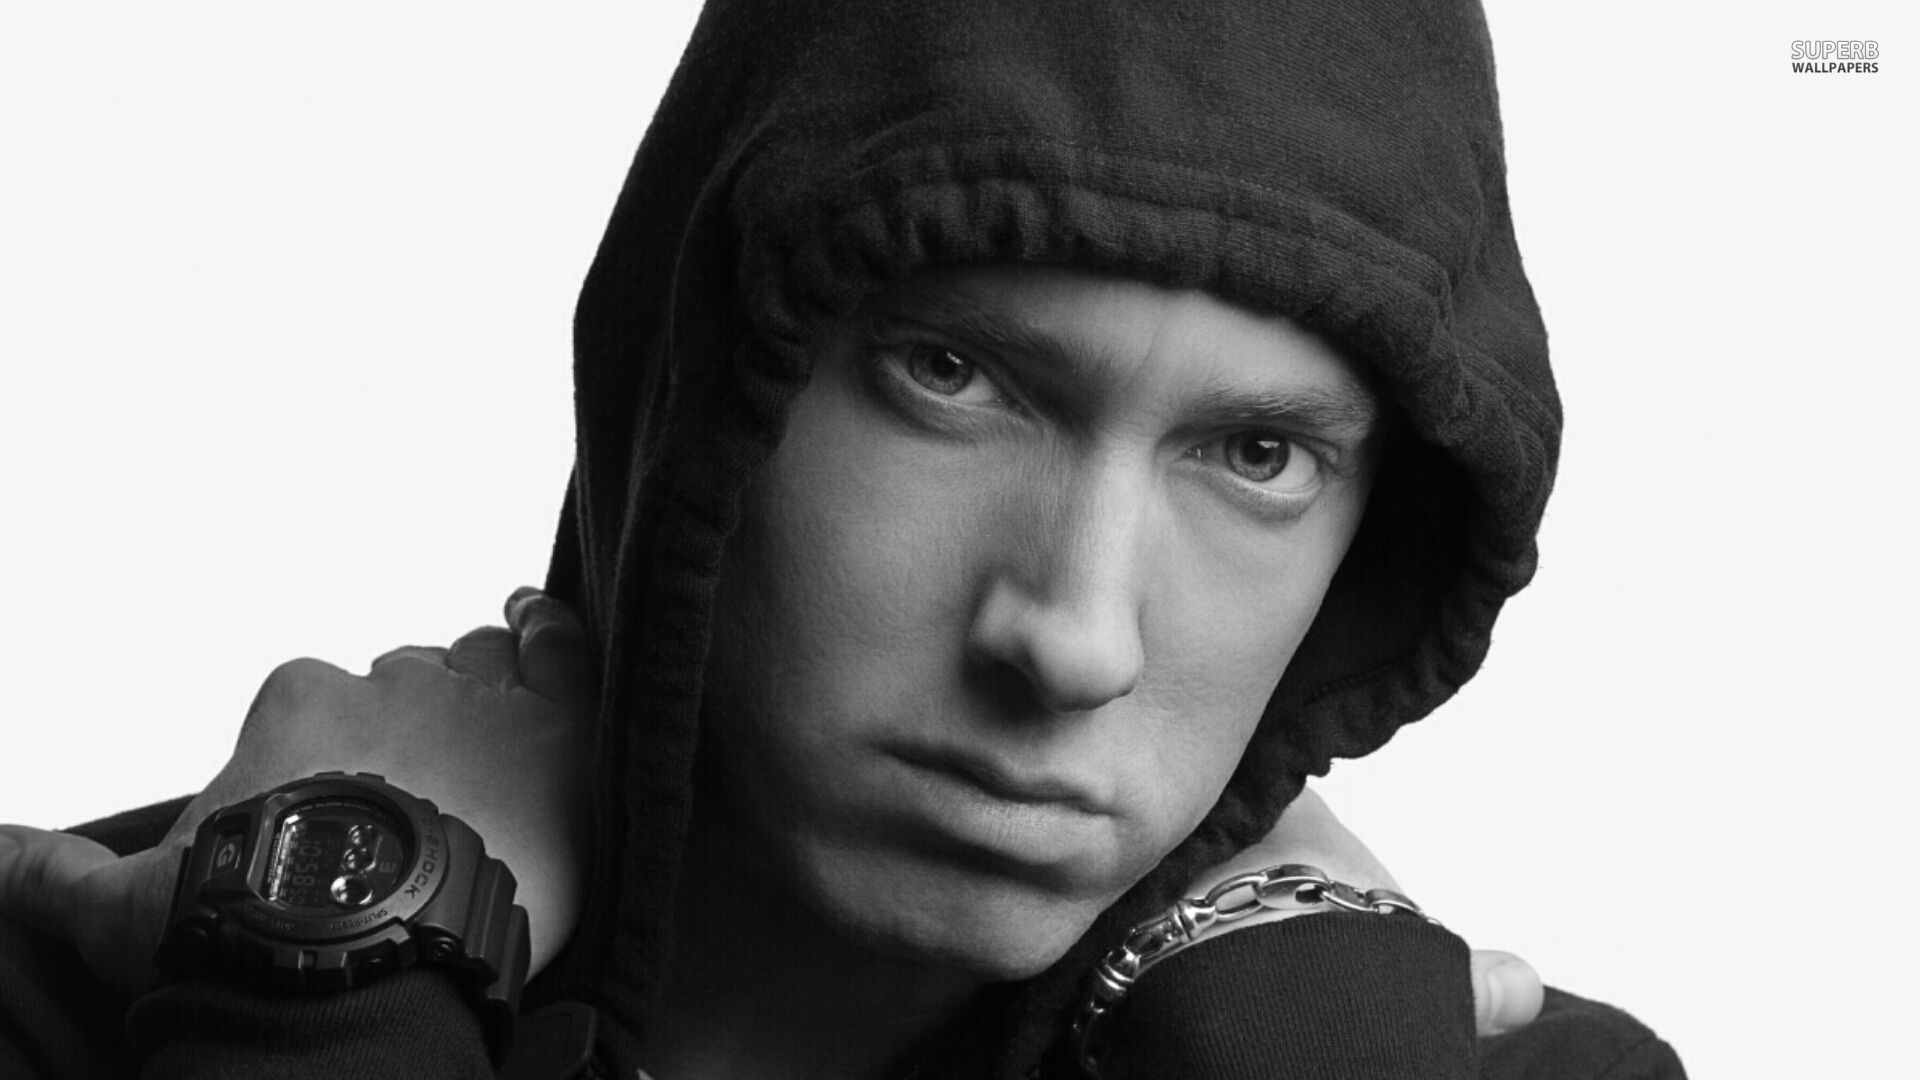 Wallpapers Eminem Group (86+)